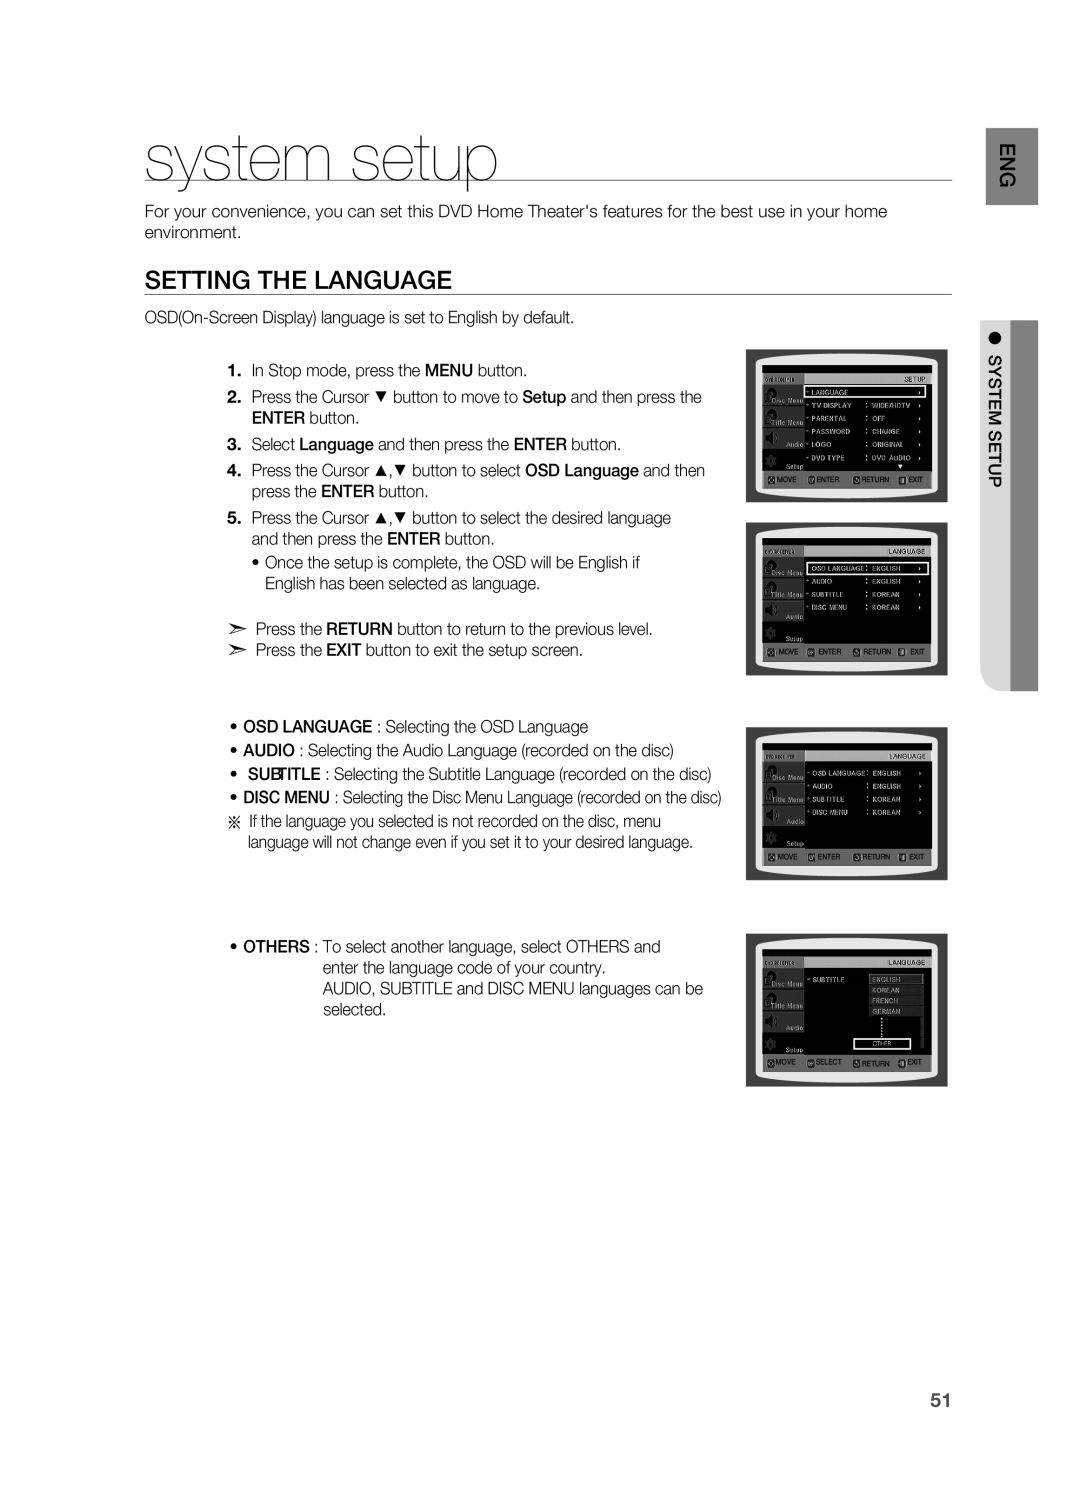 Samsung HT-TWZ315 manual system setup, Setting the Language 